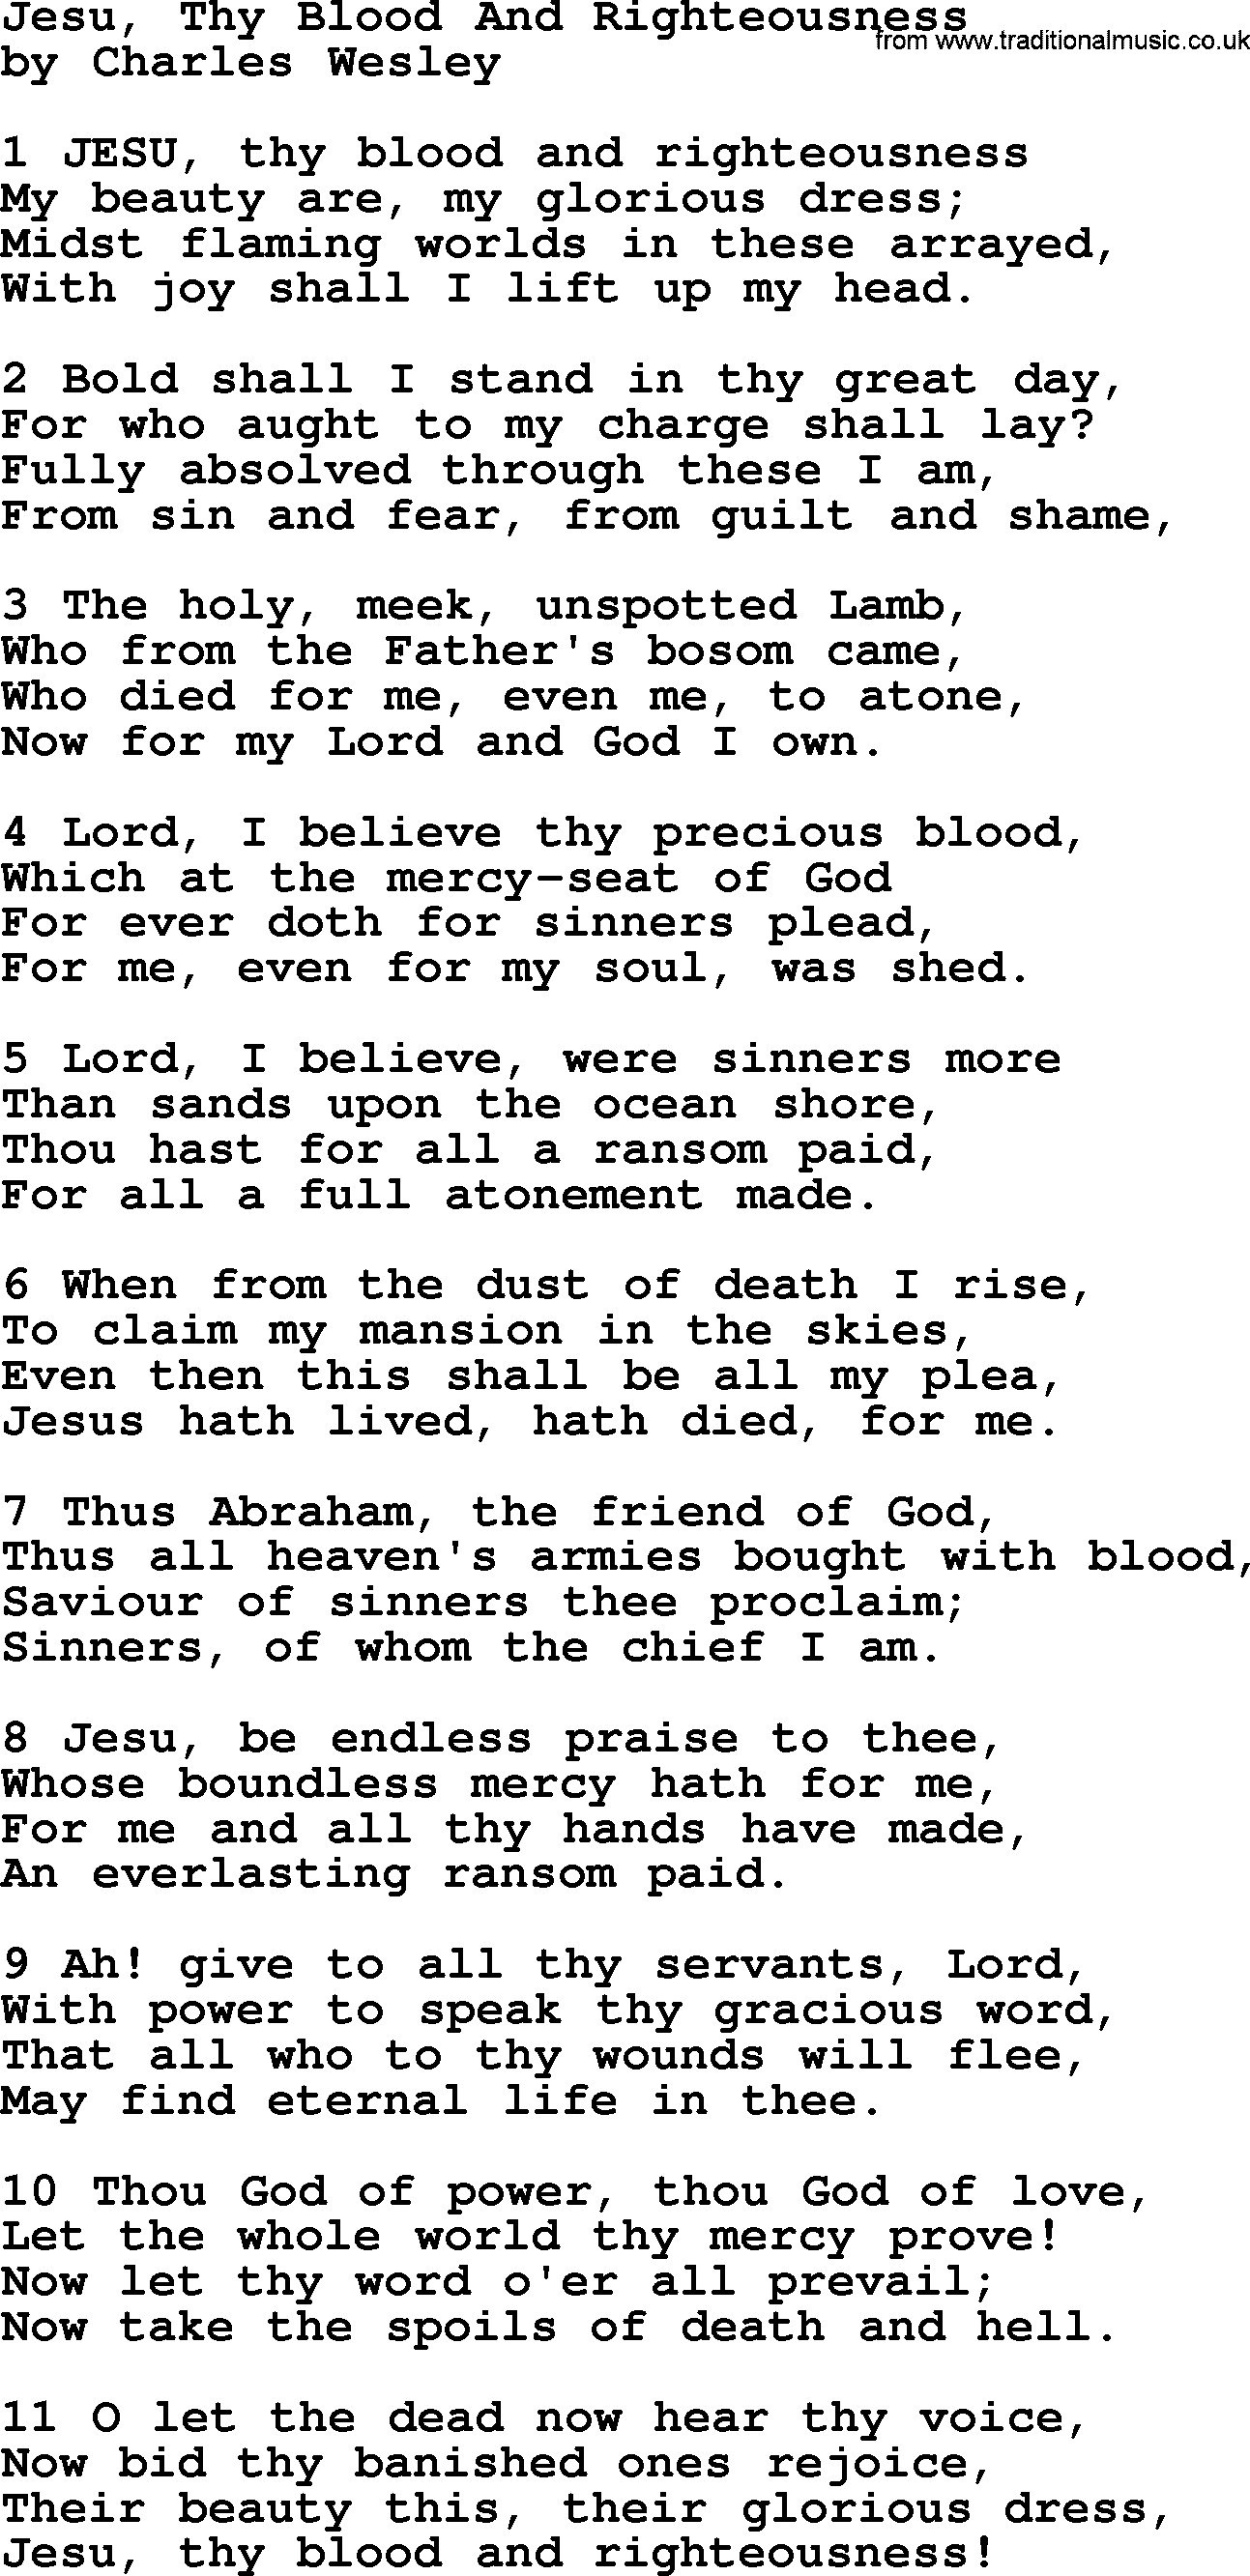 Charles Wesley hymn: Jesu, Thy Blood And Righteousness, lyrics